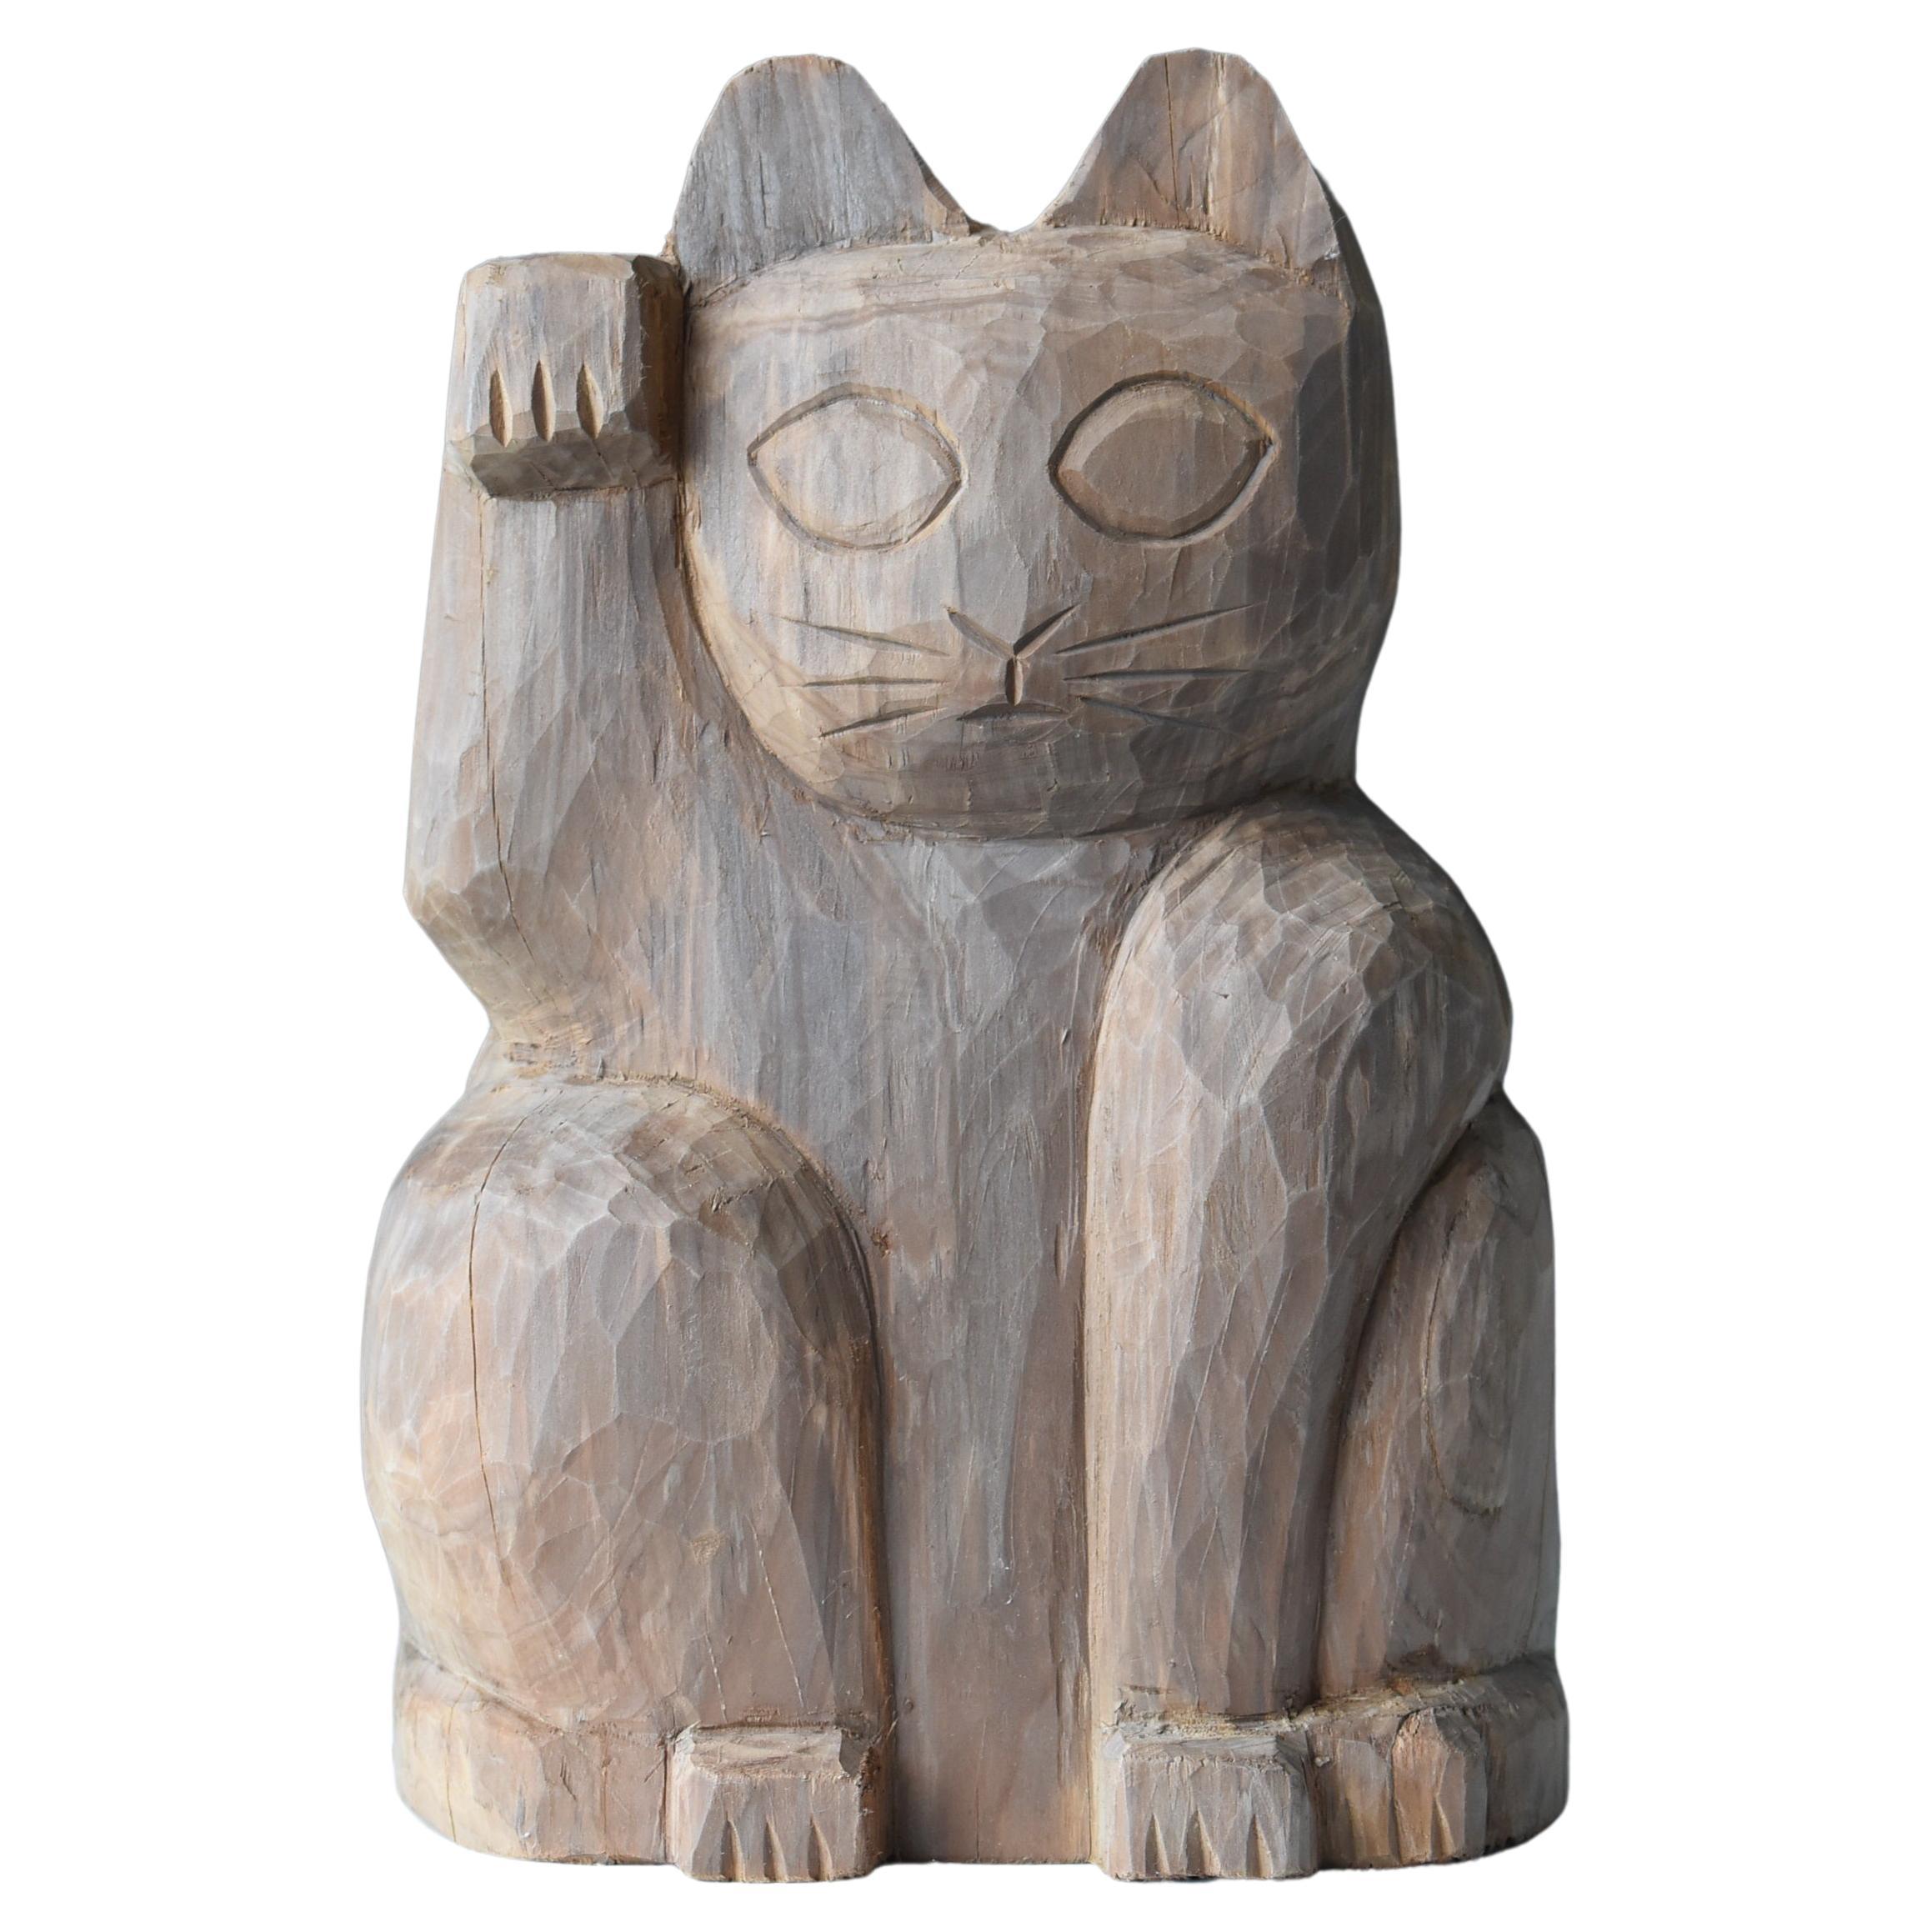 Japanese Old Wood Carving Maneki Neko 1950s-1970s/Beckoning Cat Sculpture mingei